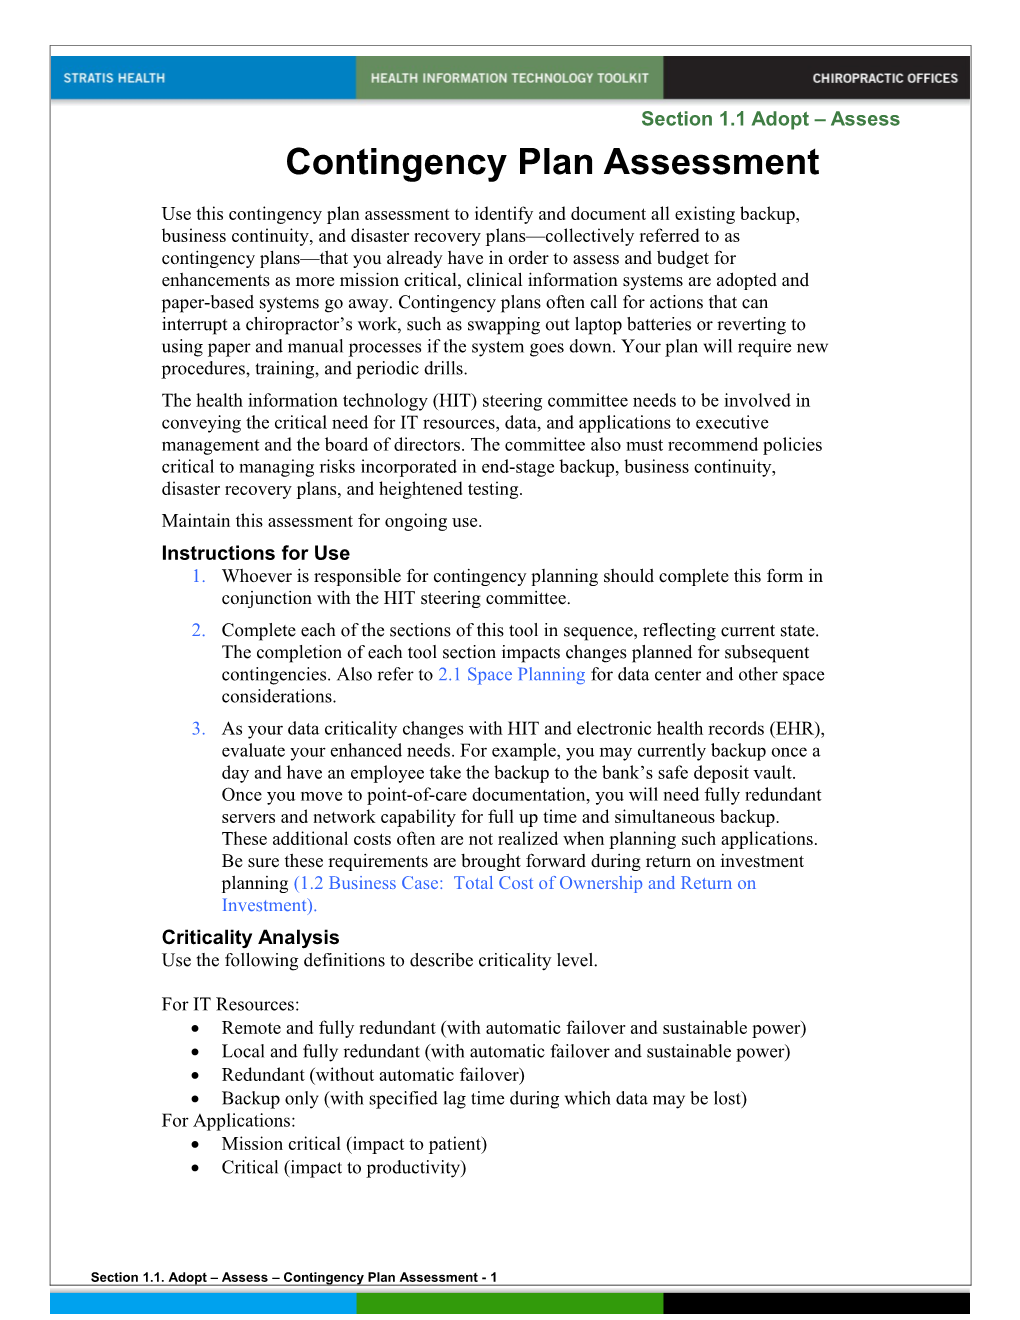 1.1 Contingency Plan Assessment